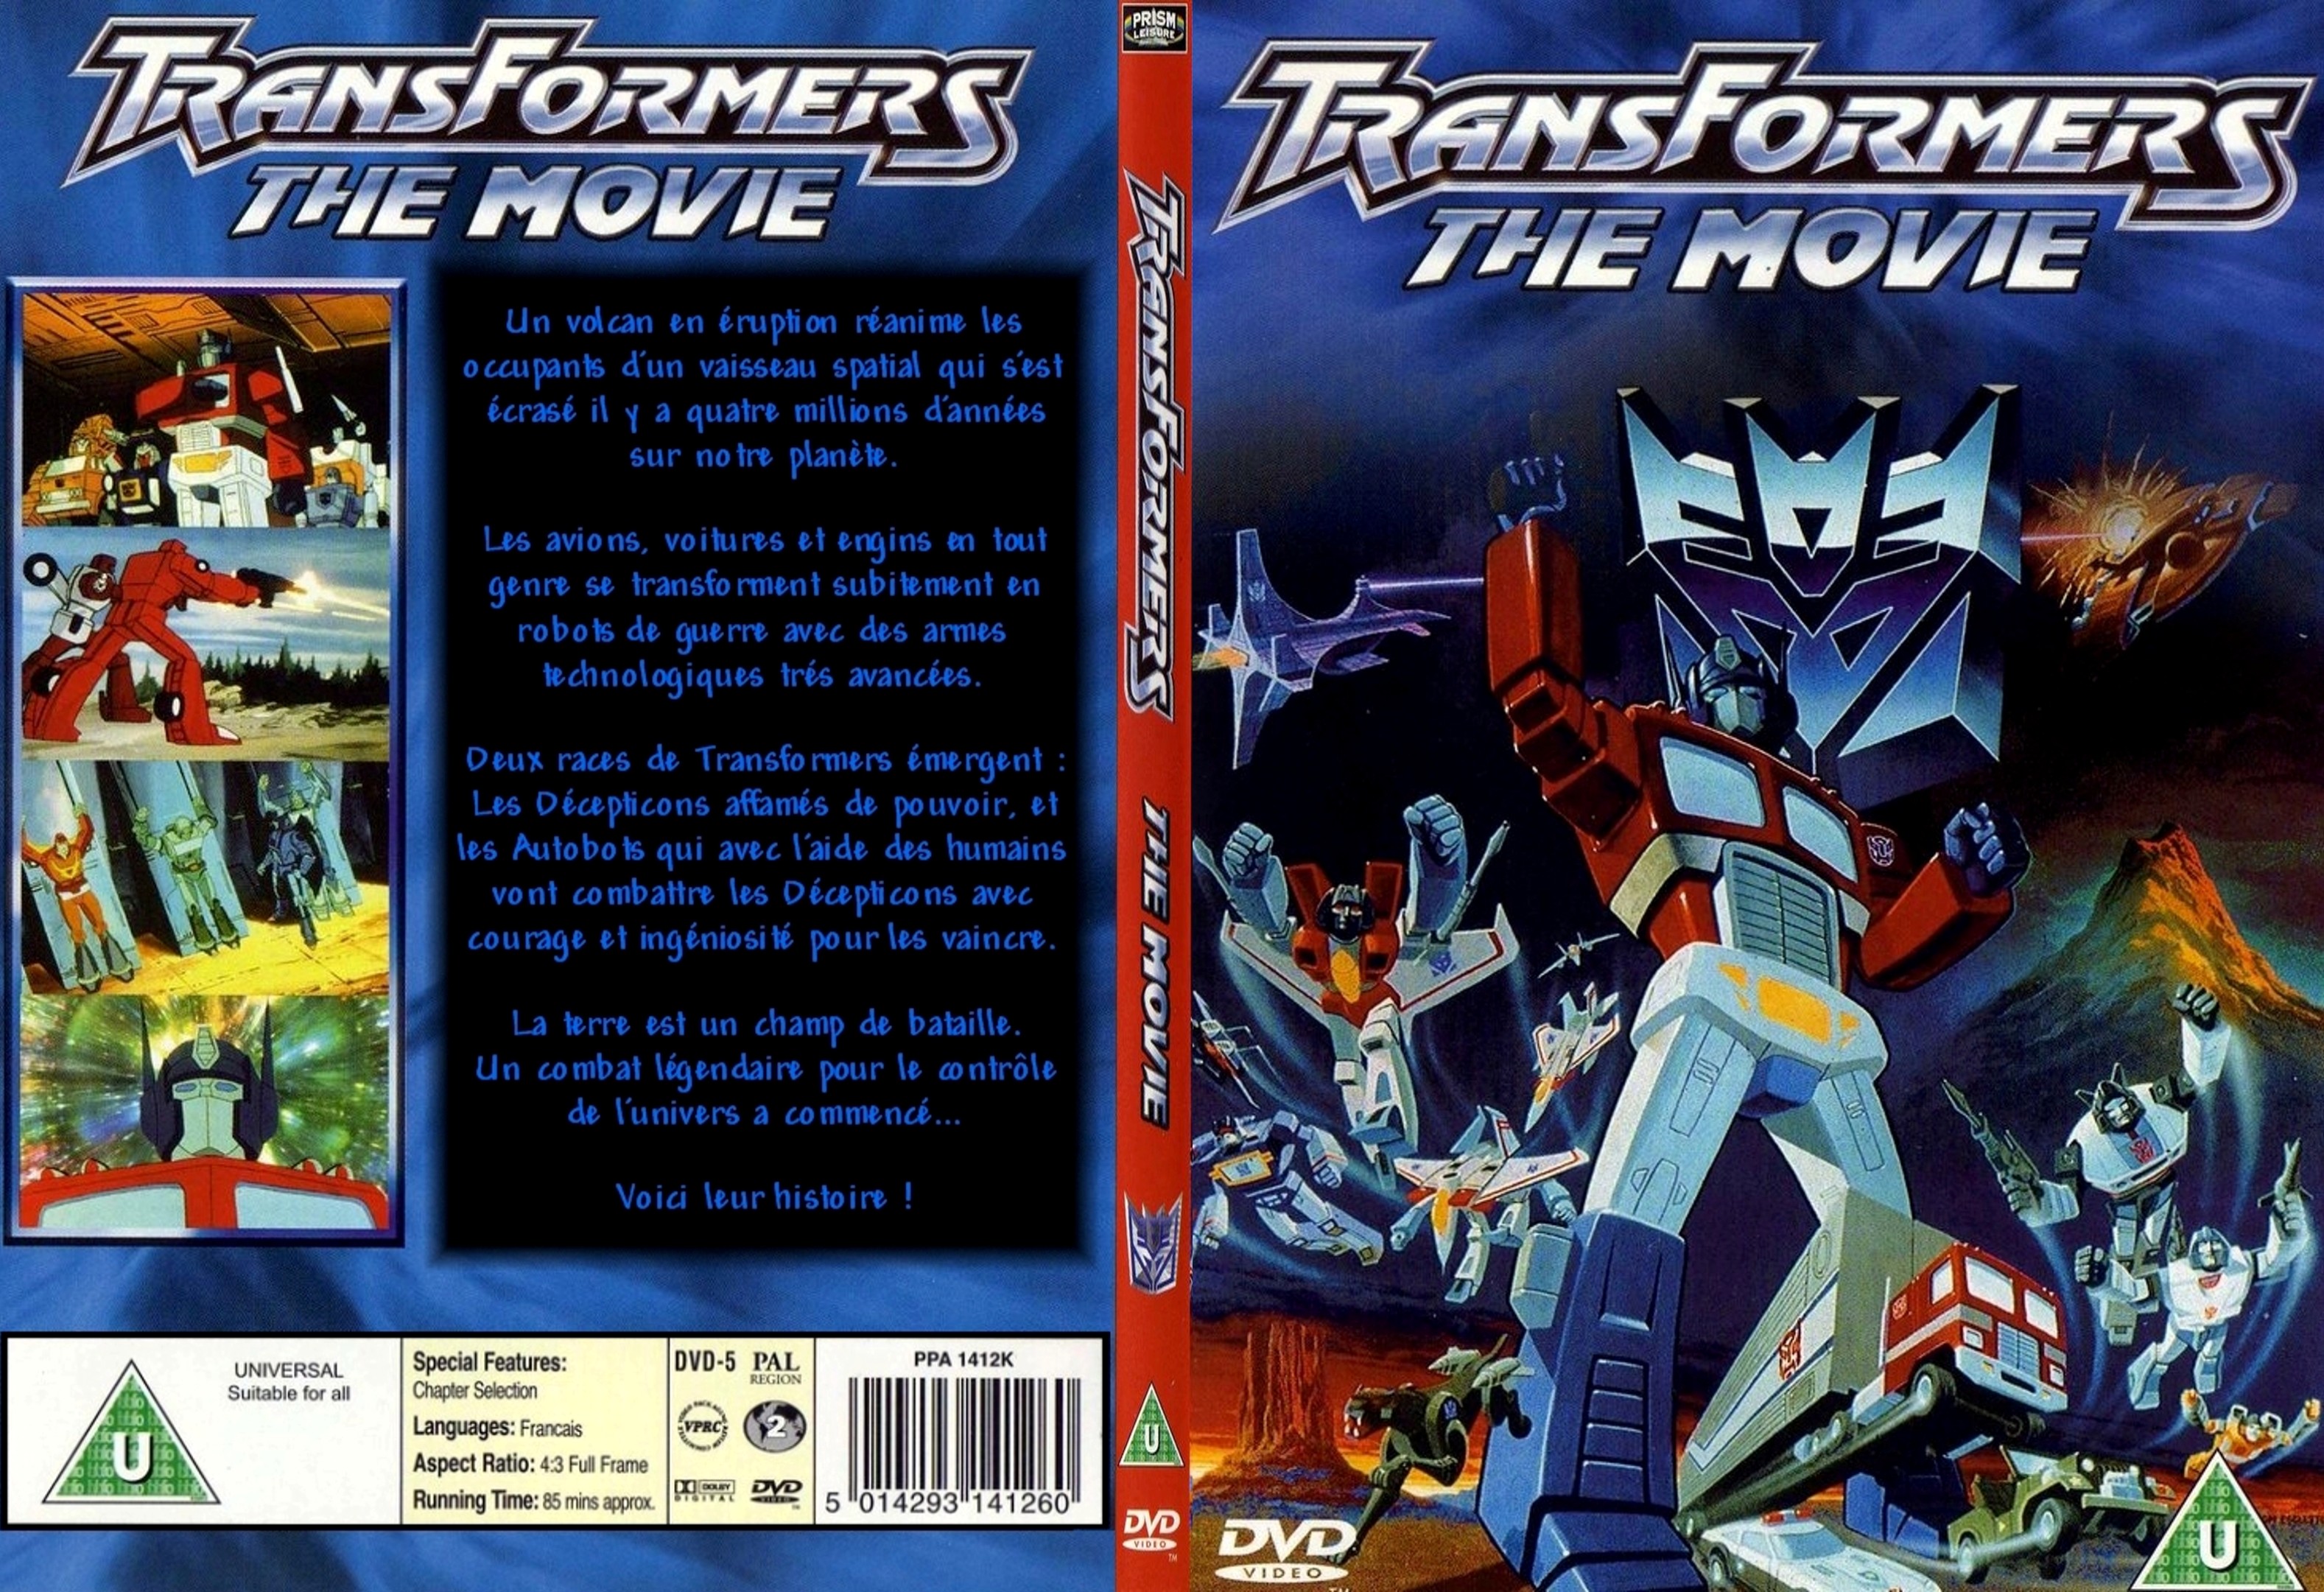 Jaquette DVD Transformers the movie (DA) custom - SLIM